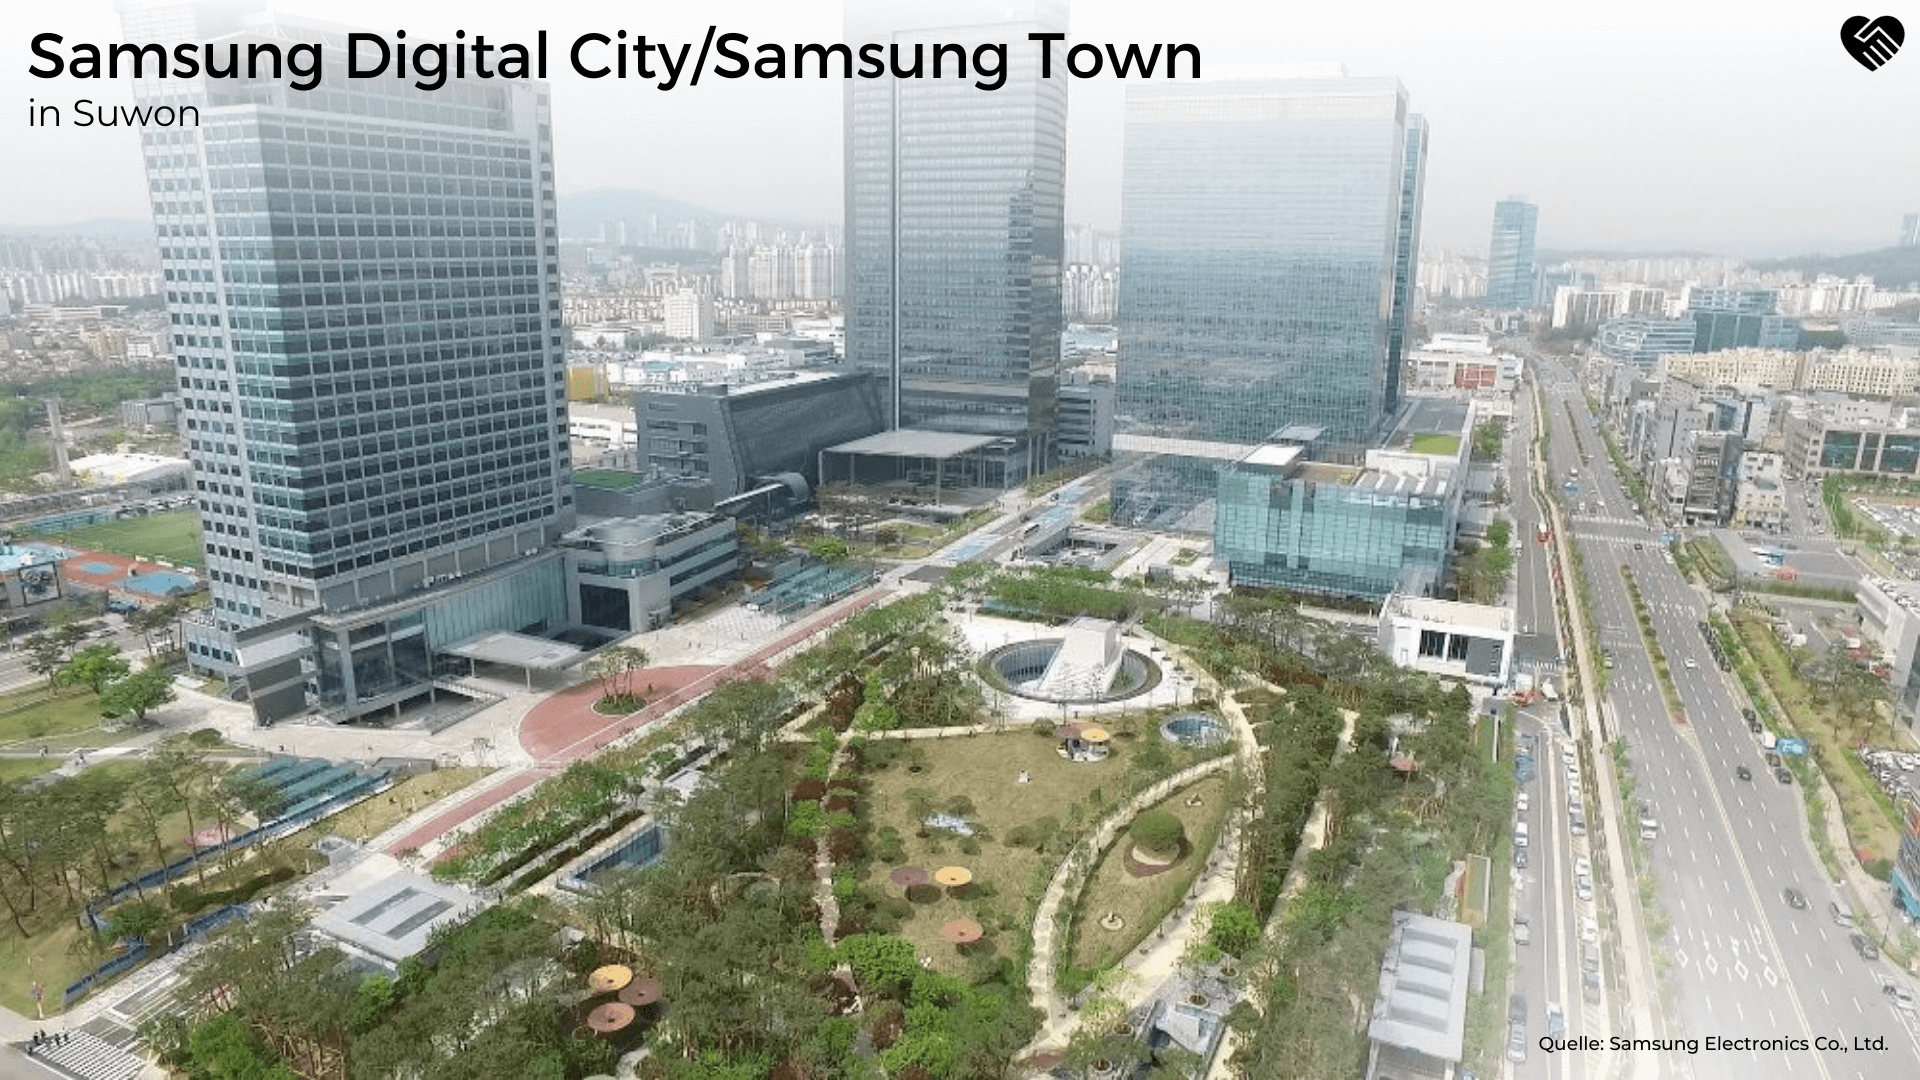 Samsung Digital City in Suwon